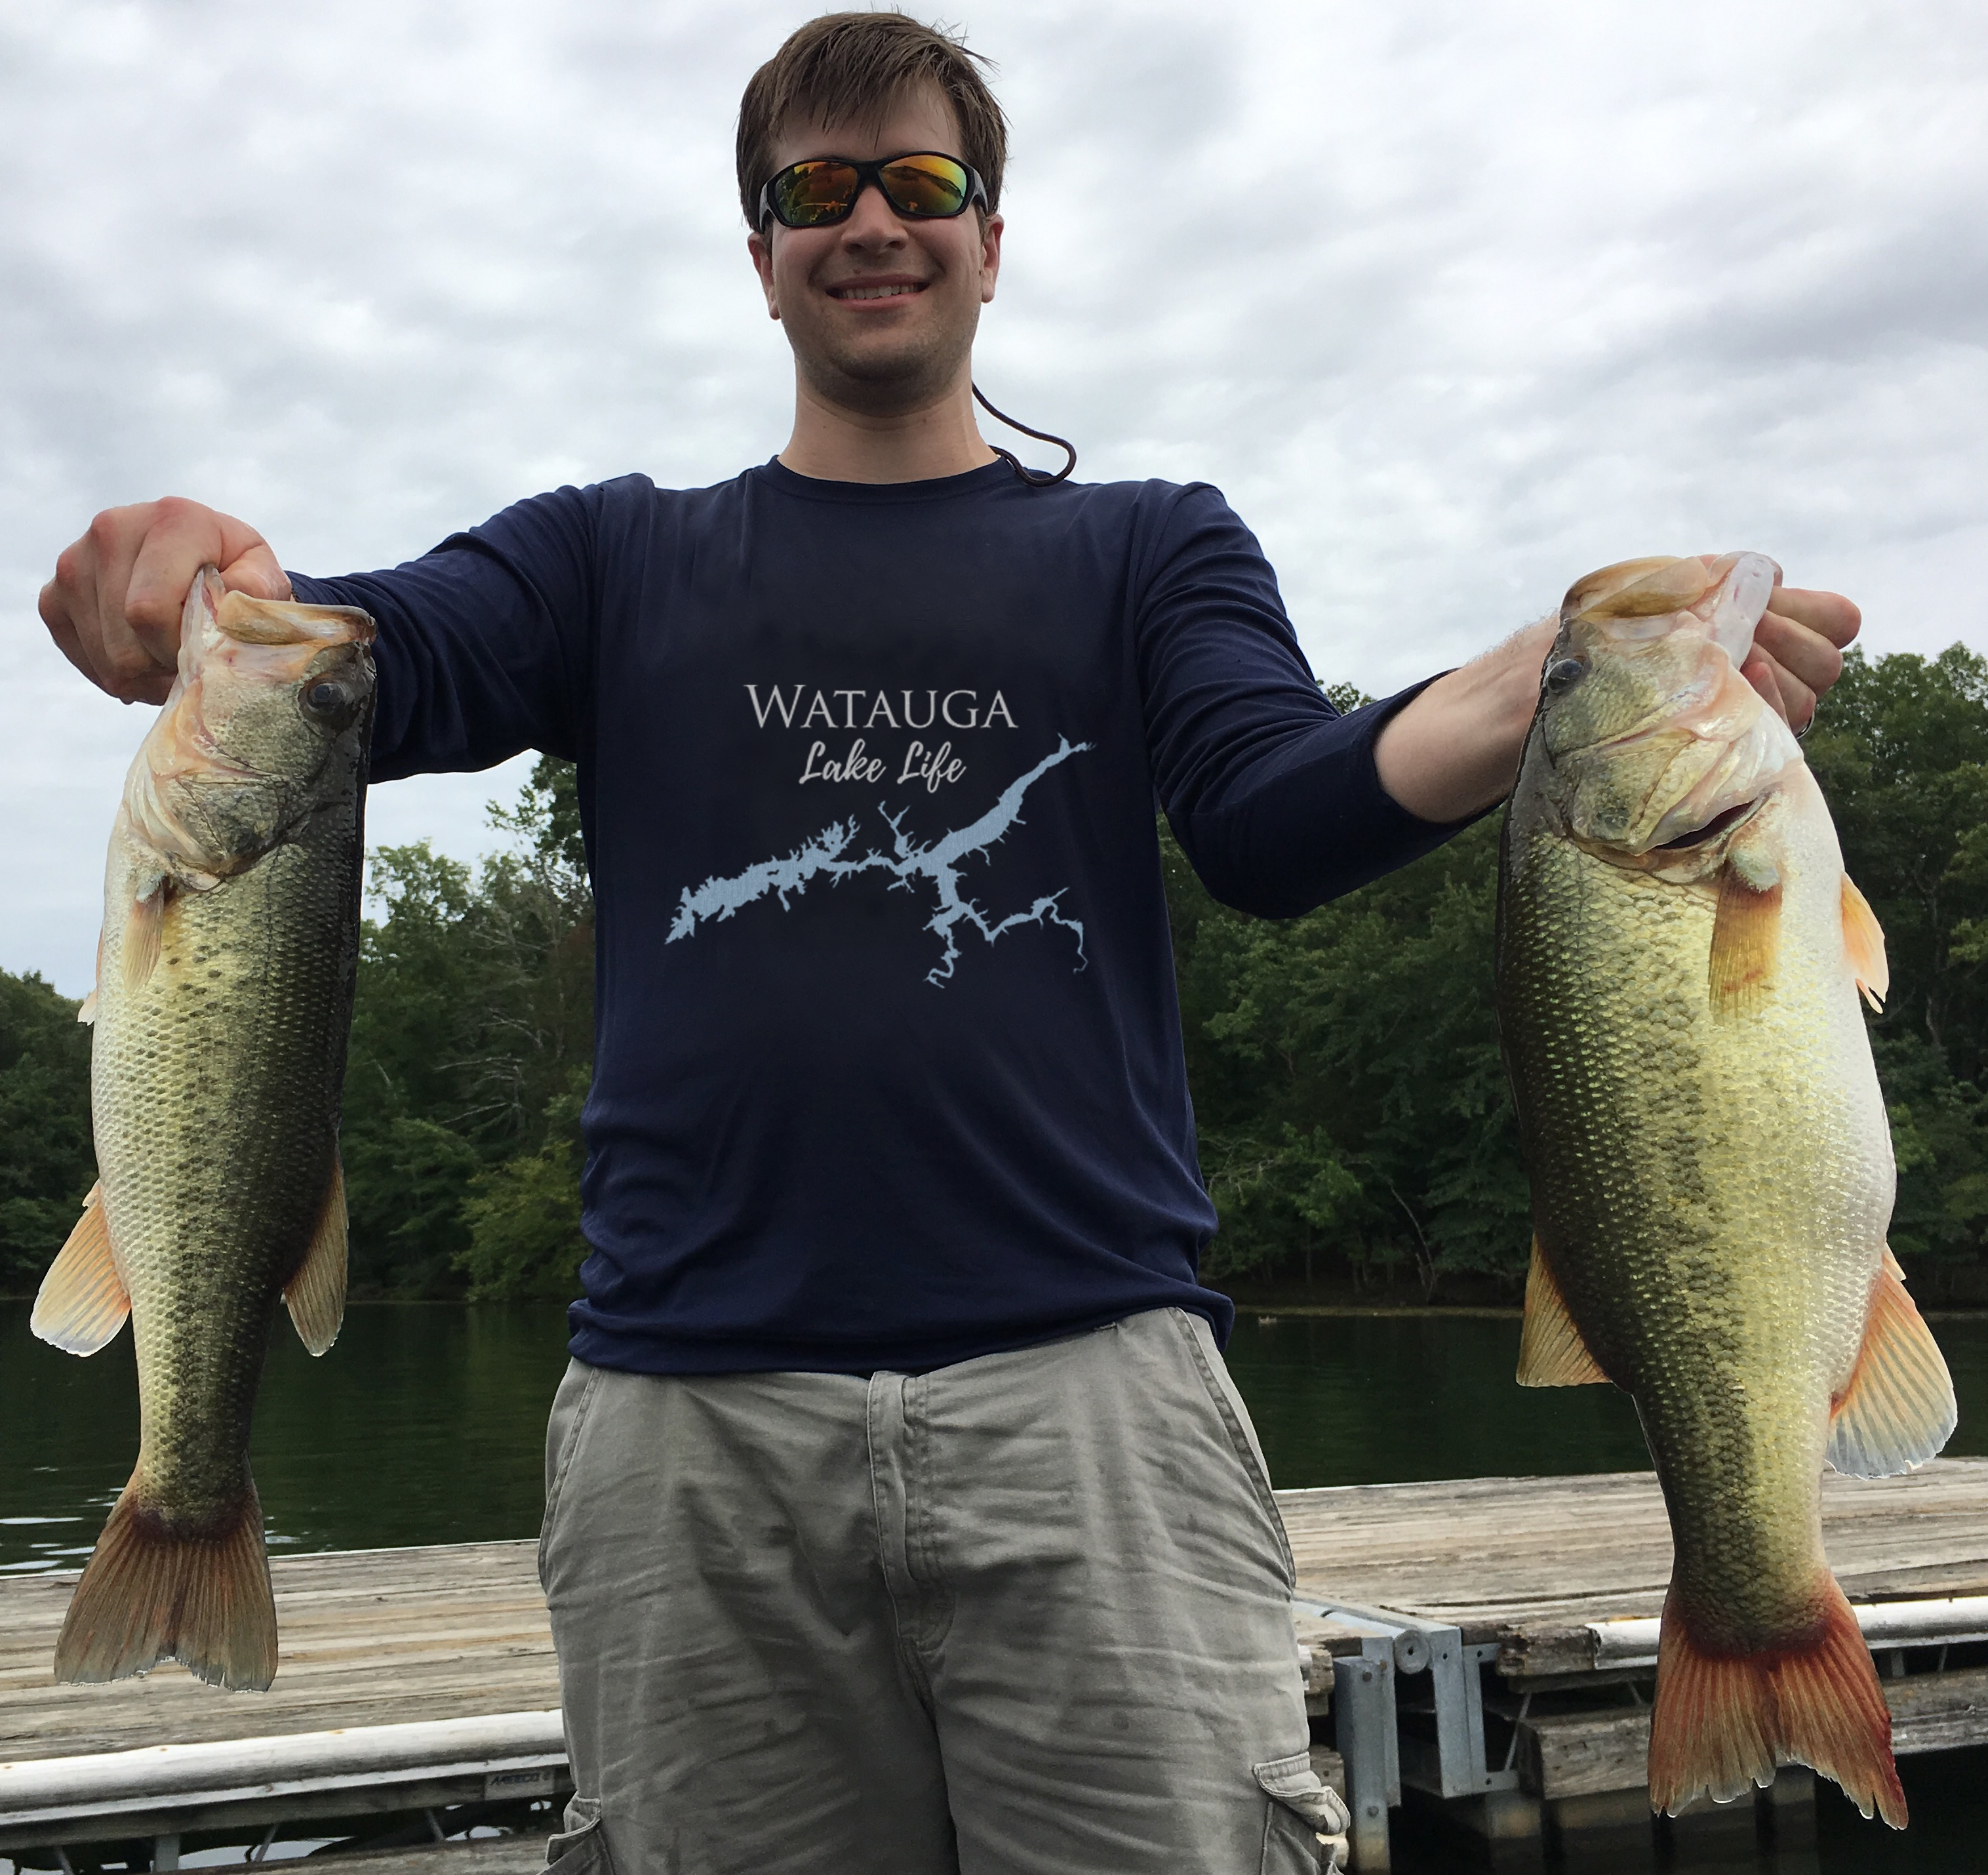 Watauga Lake Life Dri-fit Boating Shirt - Breathable Material- Men's Long Sleeve Moisture Wicking Tee - Tennessee Lake